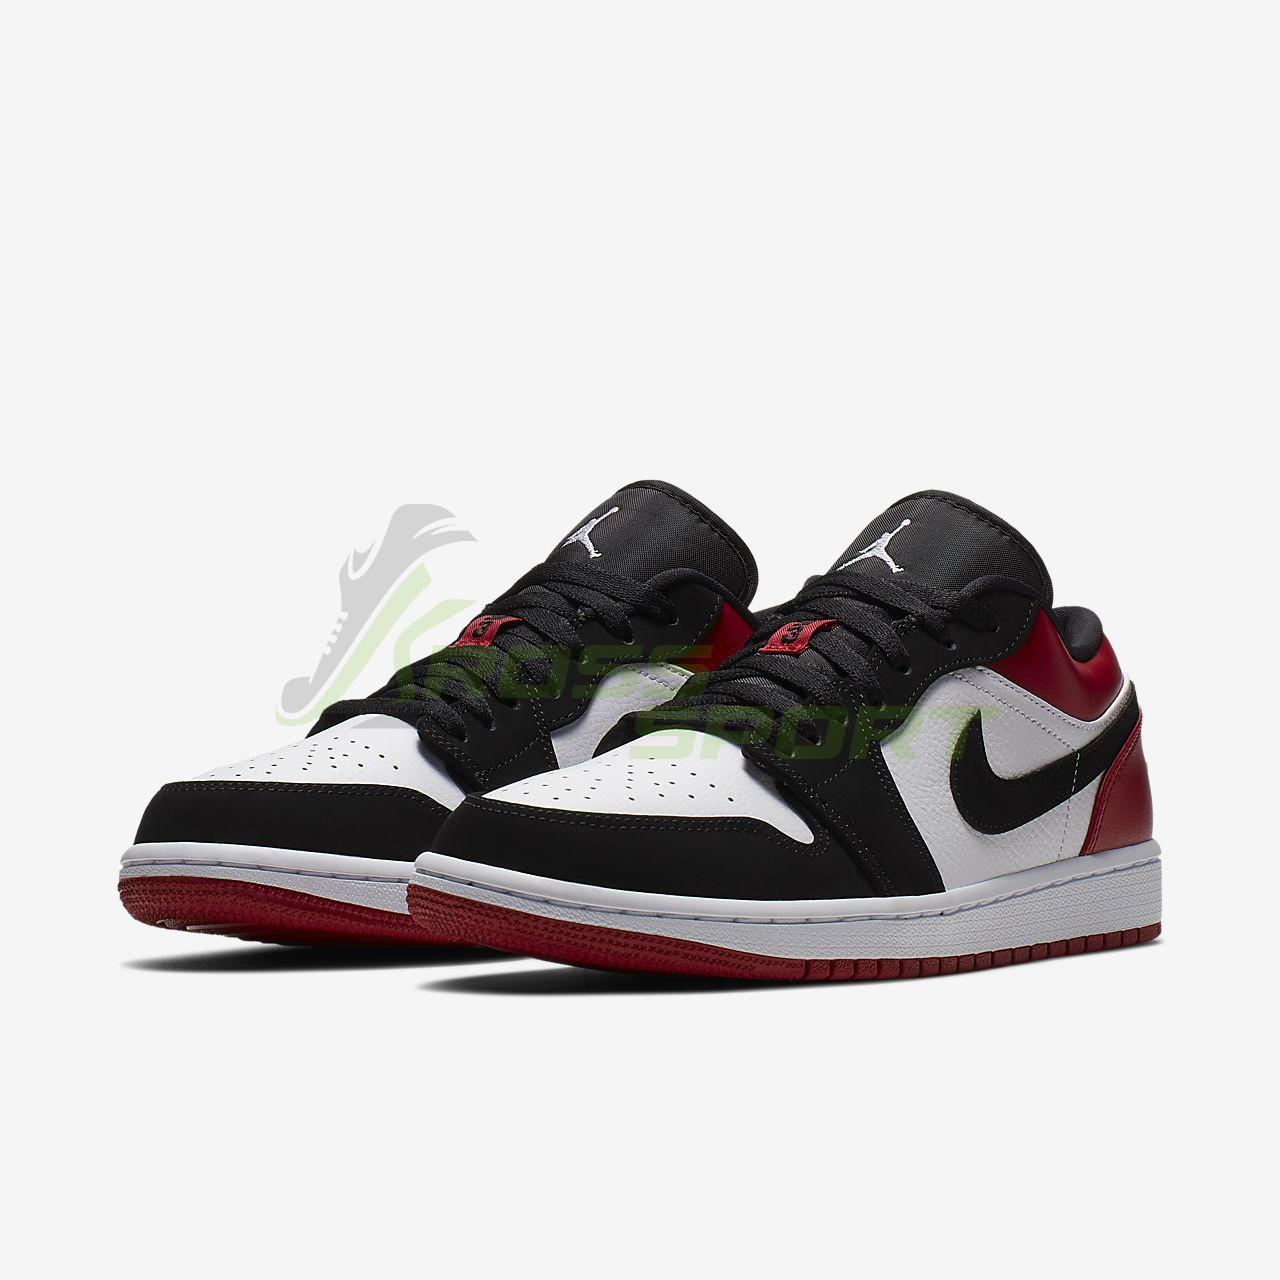  Nike Air Jordan 1 Retro "Black Toe" Low Black/White/Red